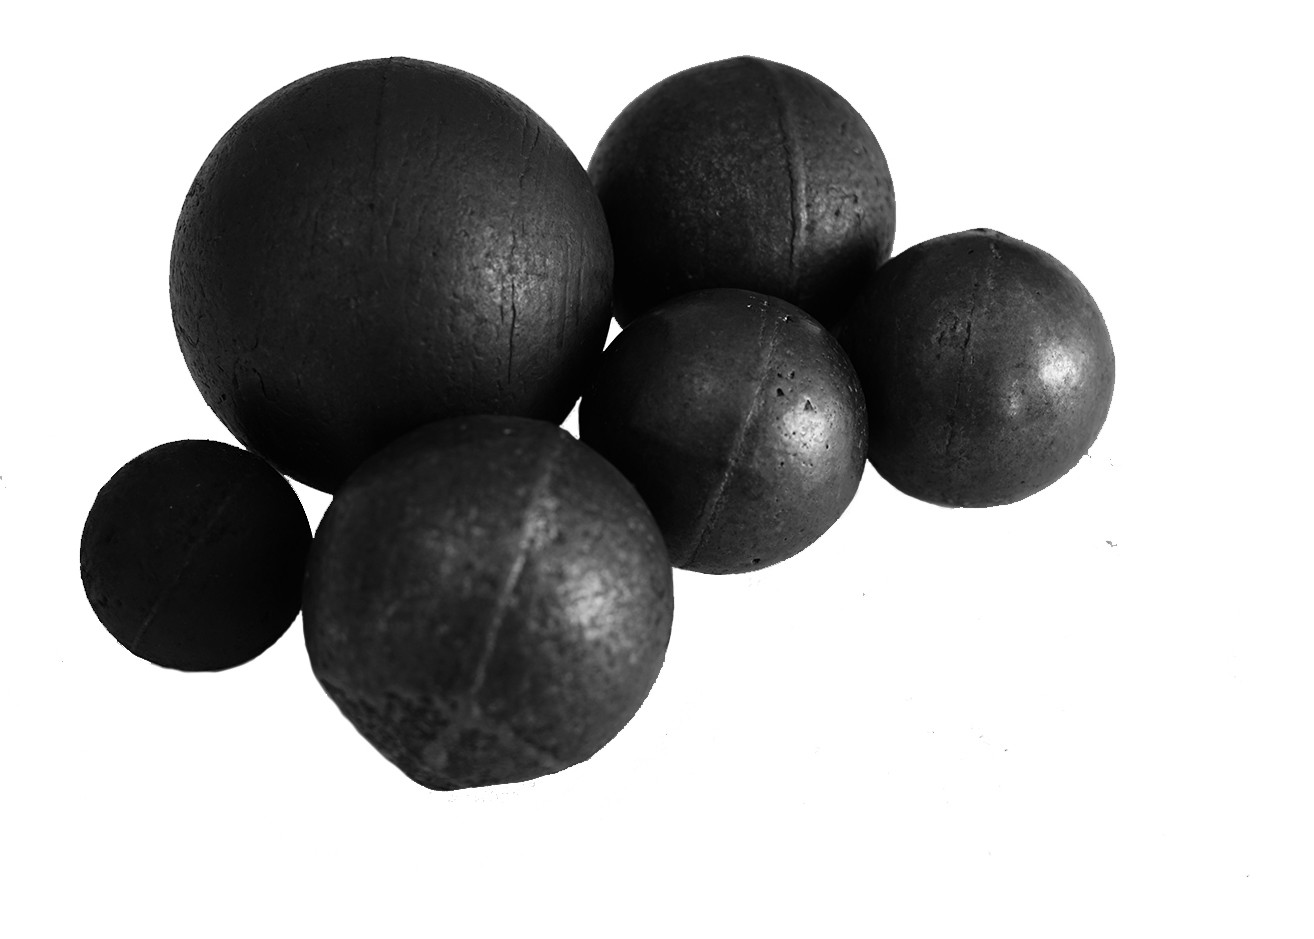 VEGA Casting Media Grinding Balls For Mining and Cement Plants HS 73259100